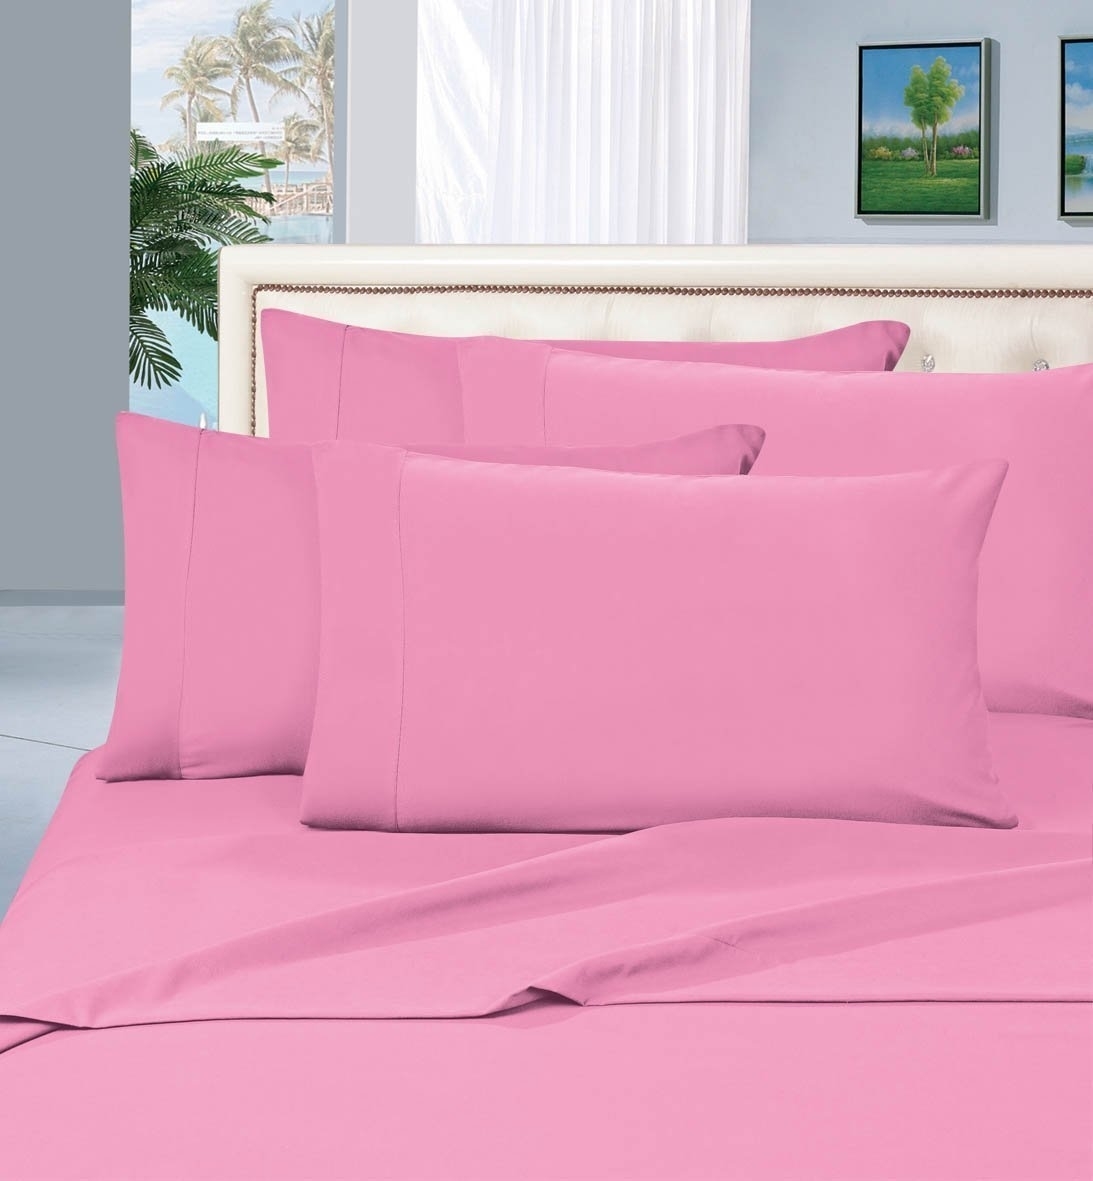 Elegant Comfort 1500 Series Wrinkle Resistant Egyptian Quality Ultra Soft Luxury 4-piece Sheet Set, California King, Light Pink